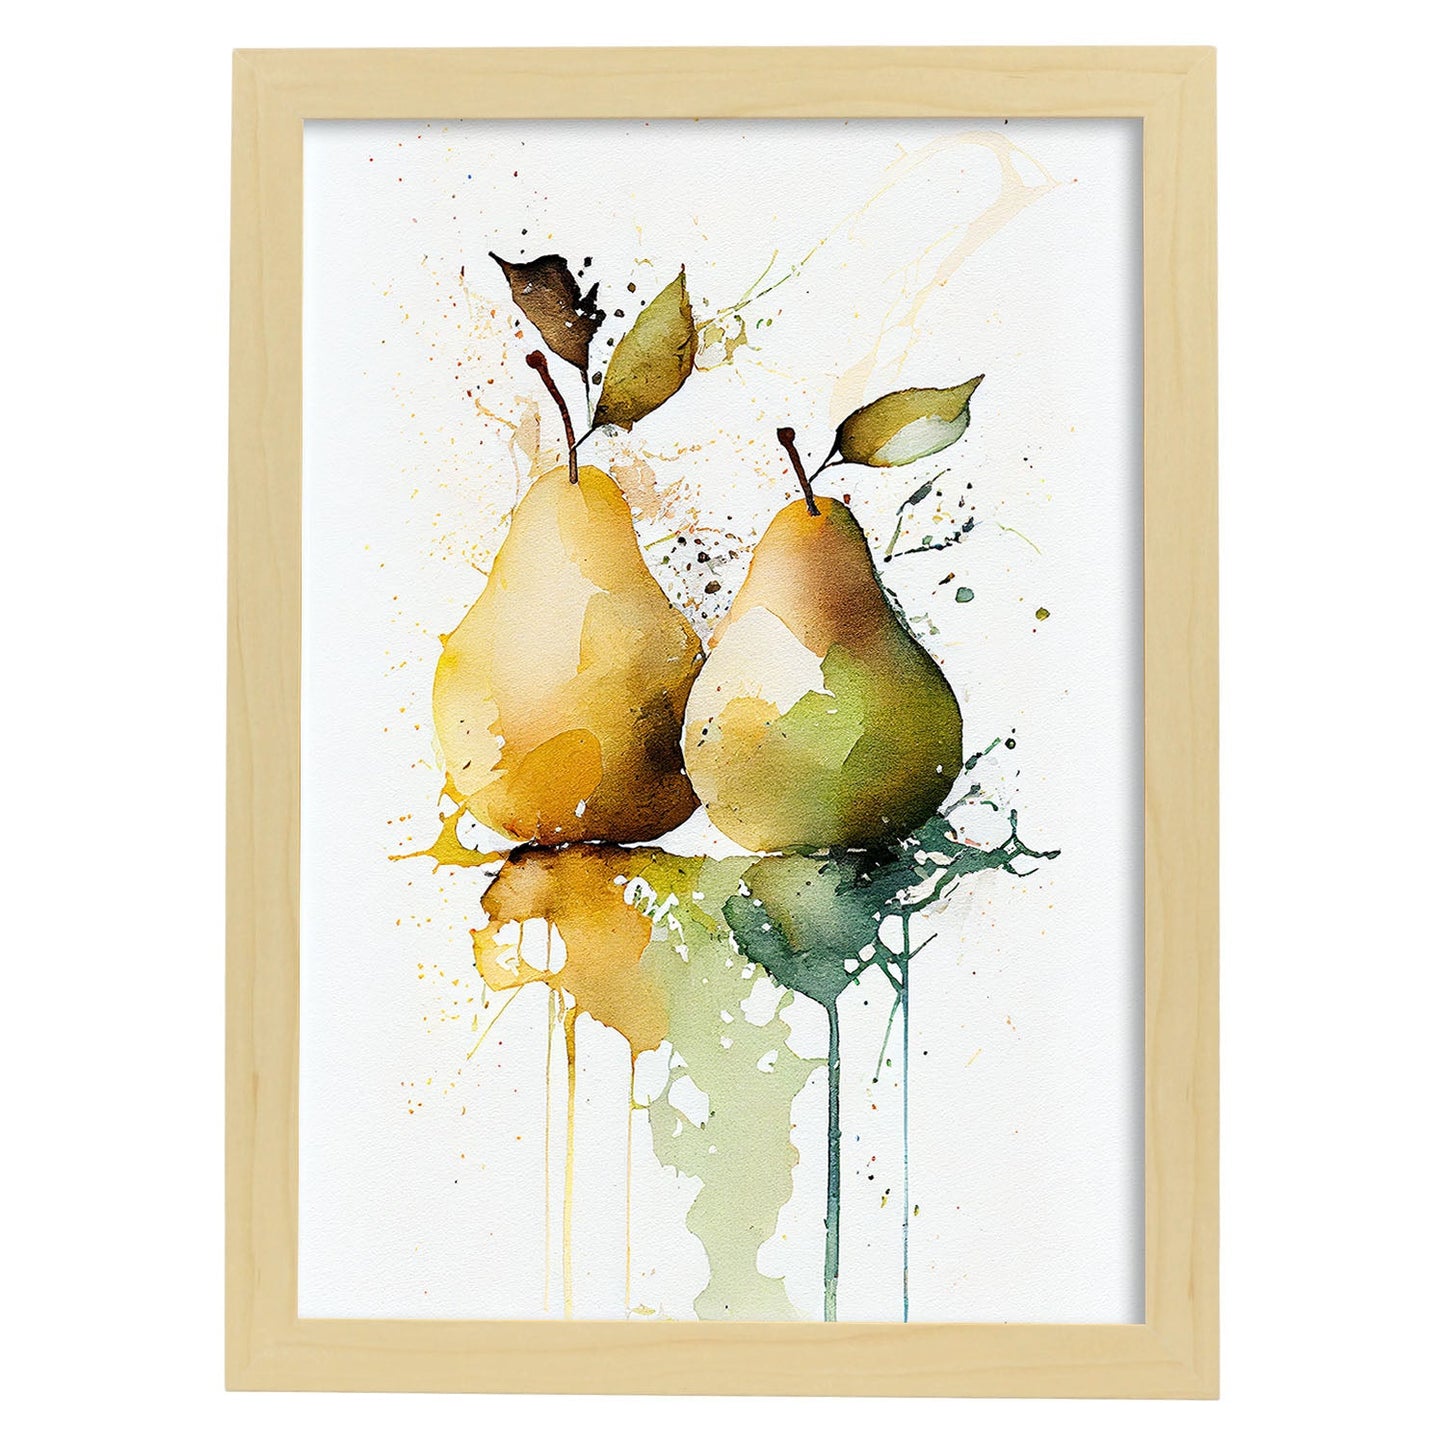 Nacnic minimalist Pears. Aesthetic Wall Art Prints for Bedroom or Living Room Design.-Artwork-Nacnic-A4-Marco Madera Clara-Nacnic Estudio SL